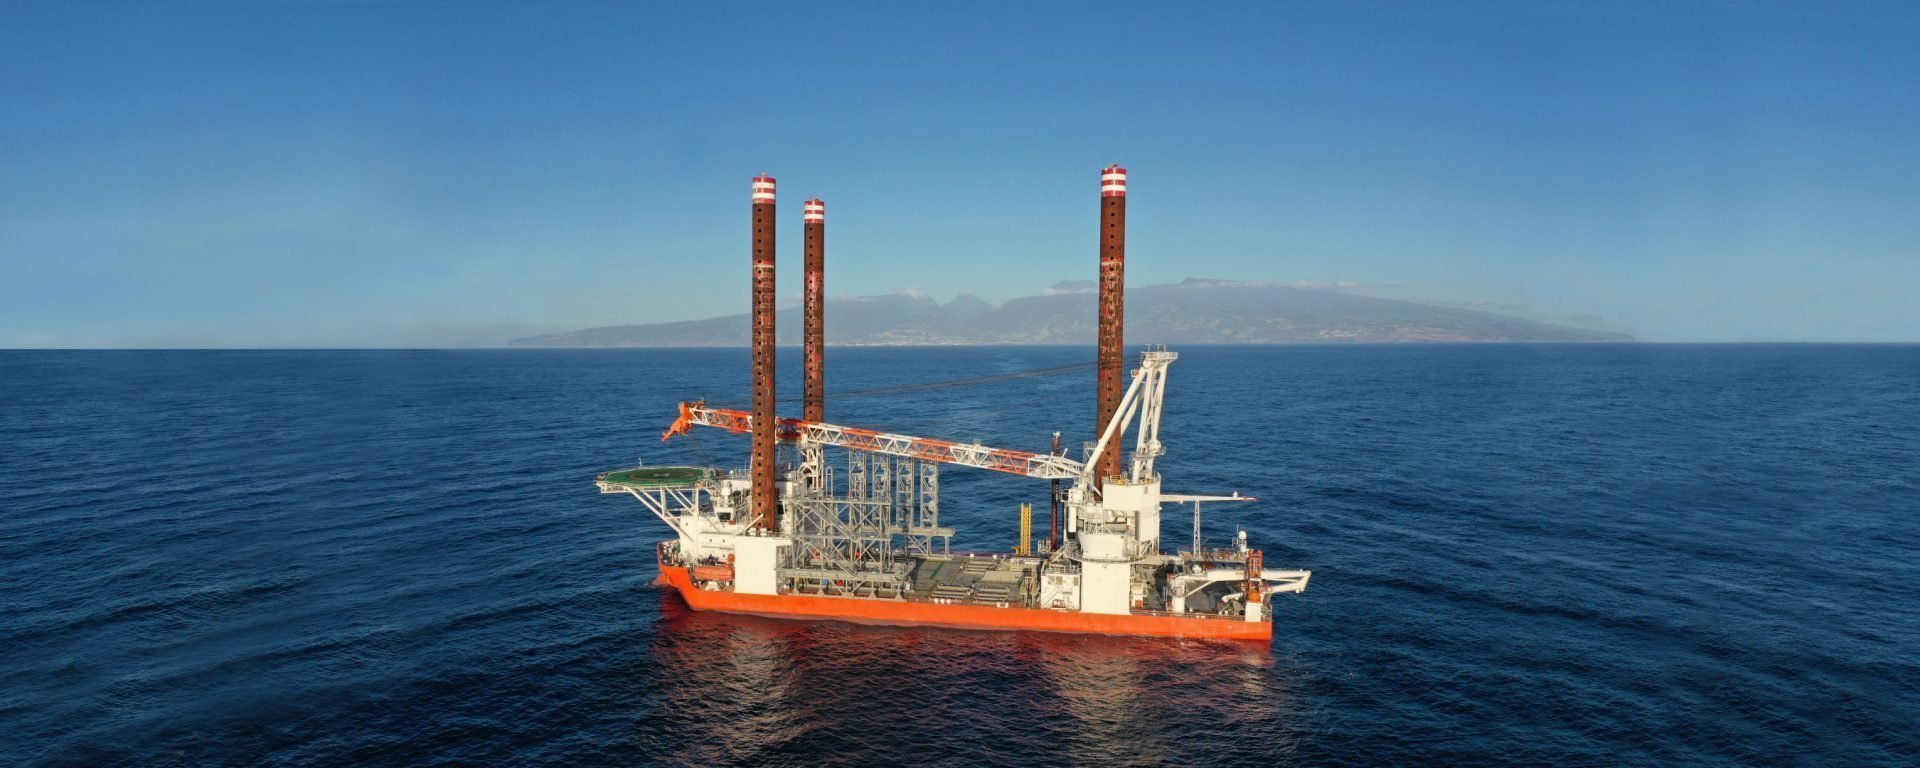 ADCエネルギー。 Ltd.WTIVが海に出ました